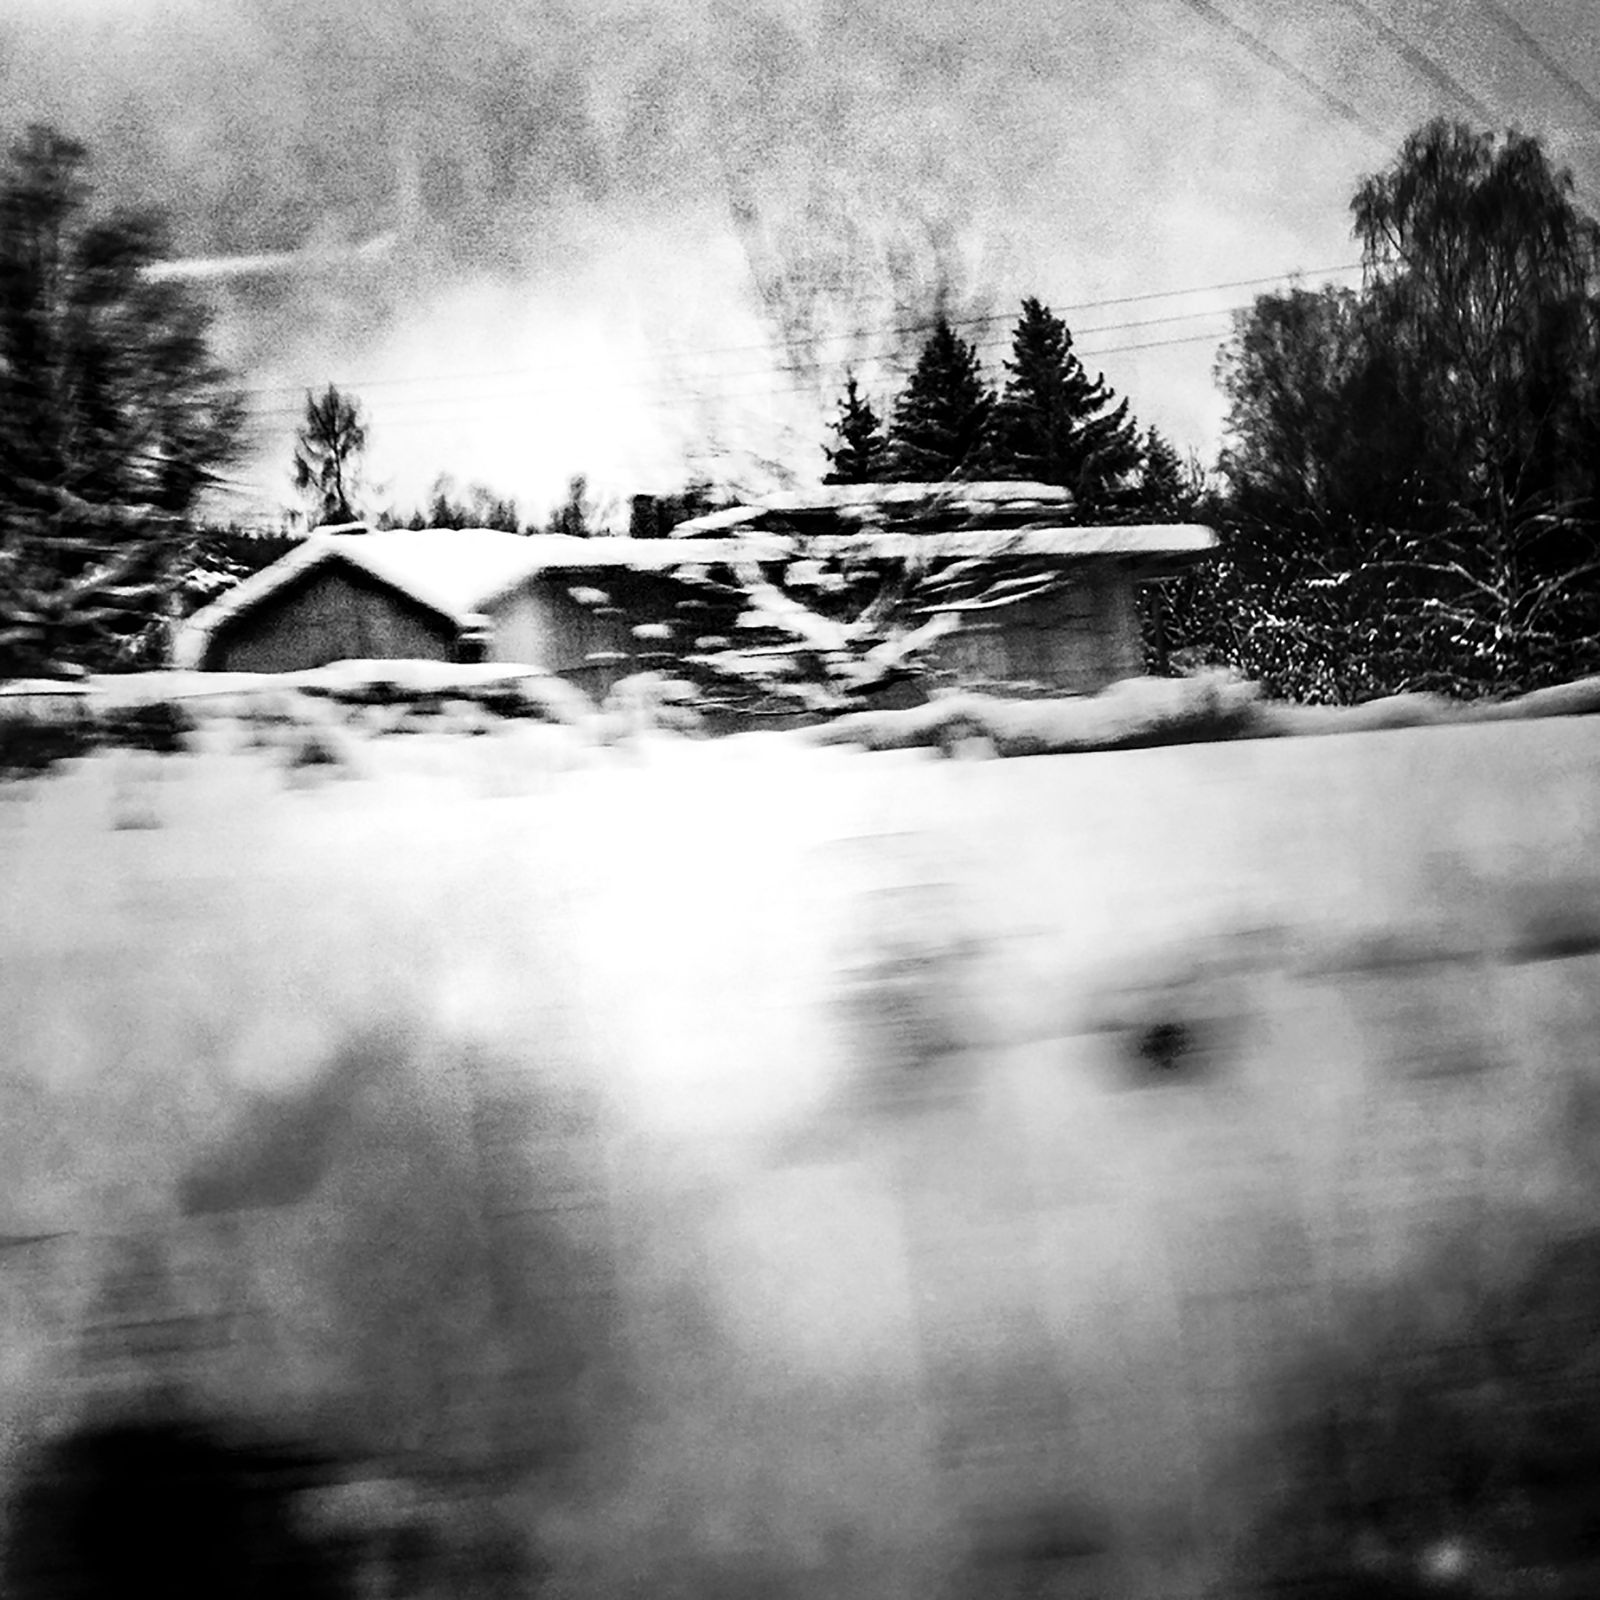 © Jana Hunterová - Image from the Uncanny Valley (a photography diary) photography project